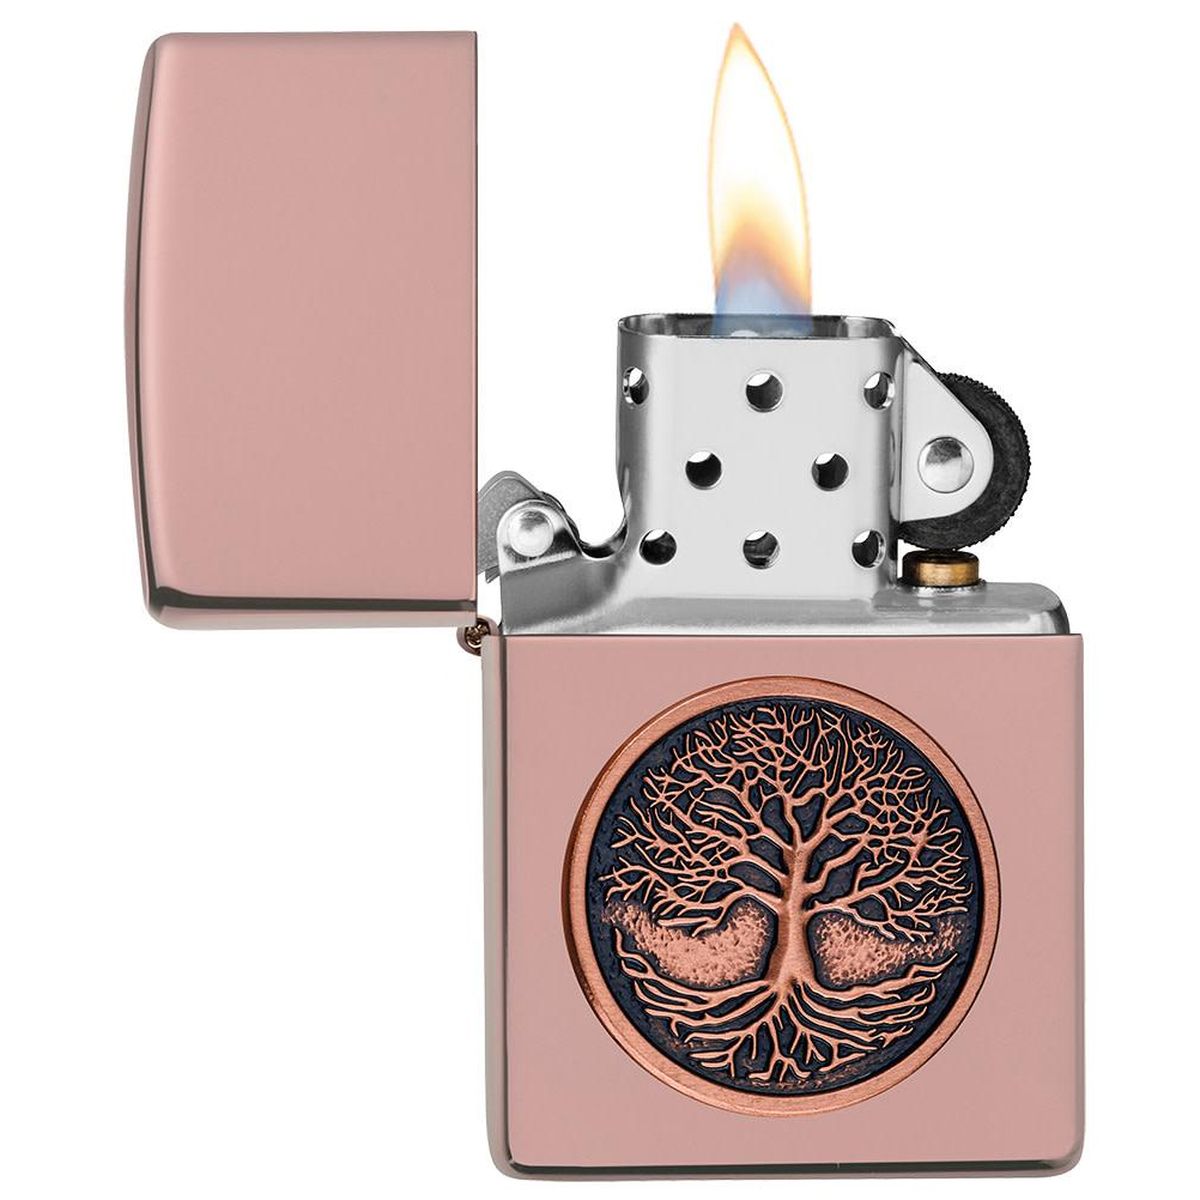 Tree of life - Zippo Lighter